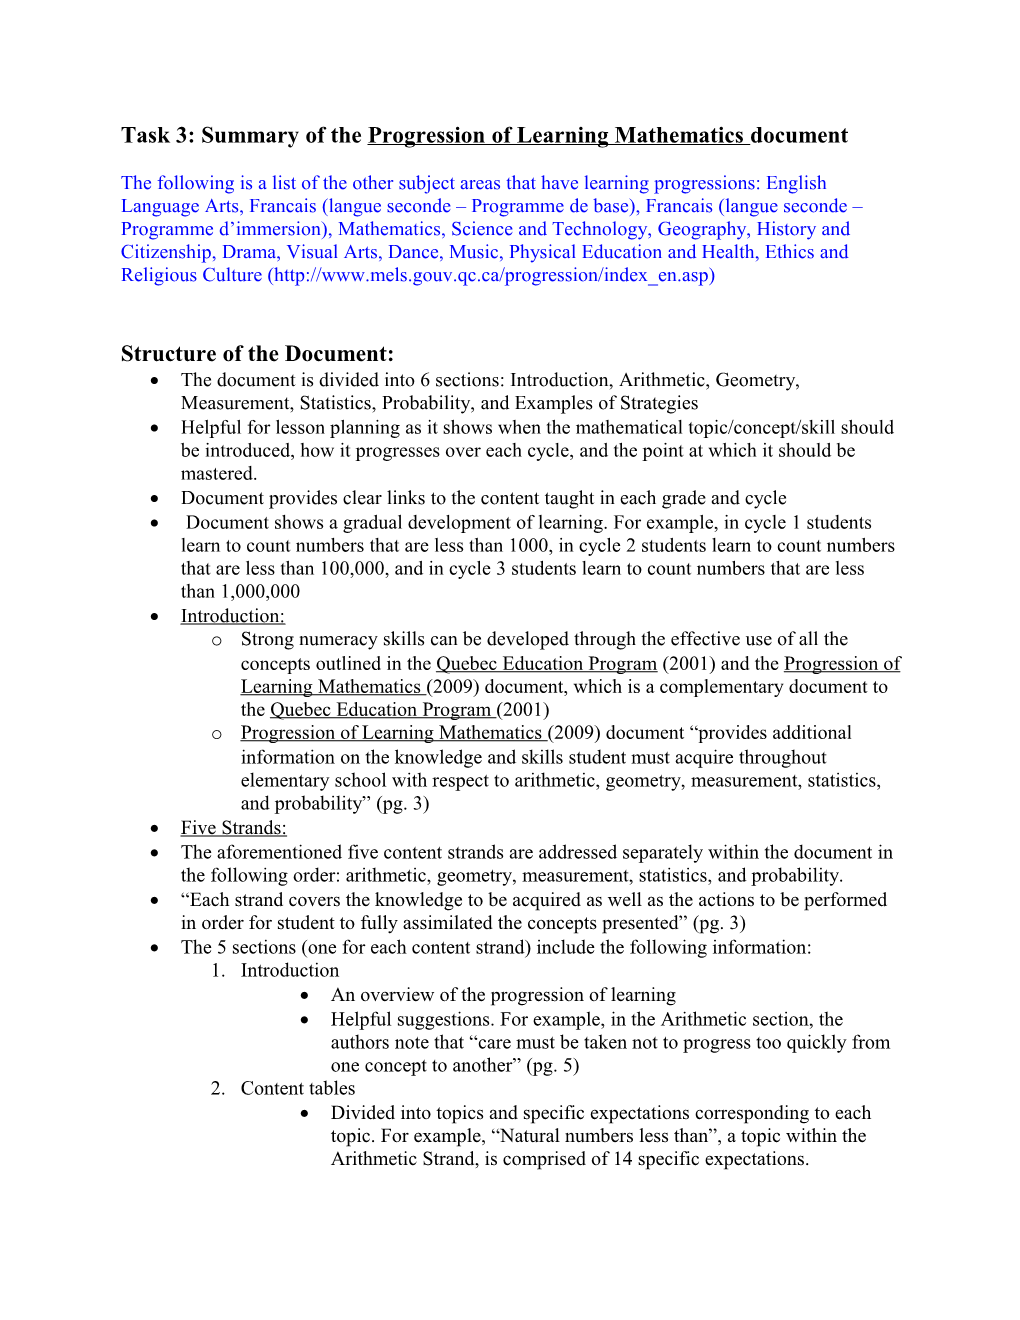 Task 3: Summary of the Progression of Learning Mathematics Document